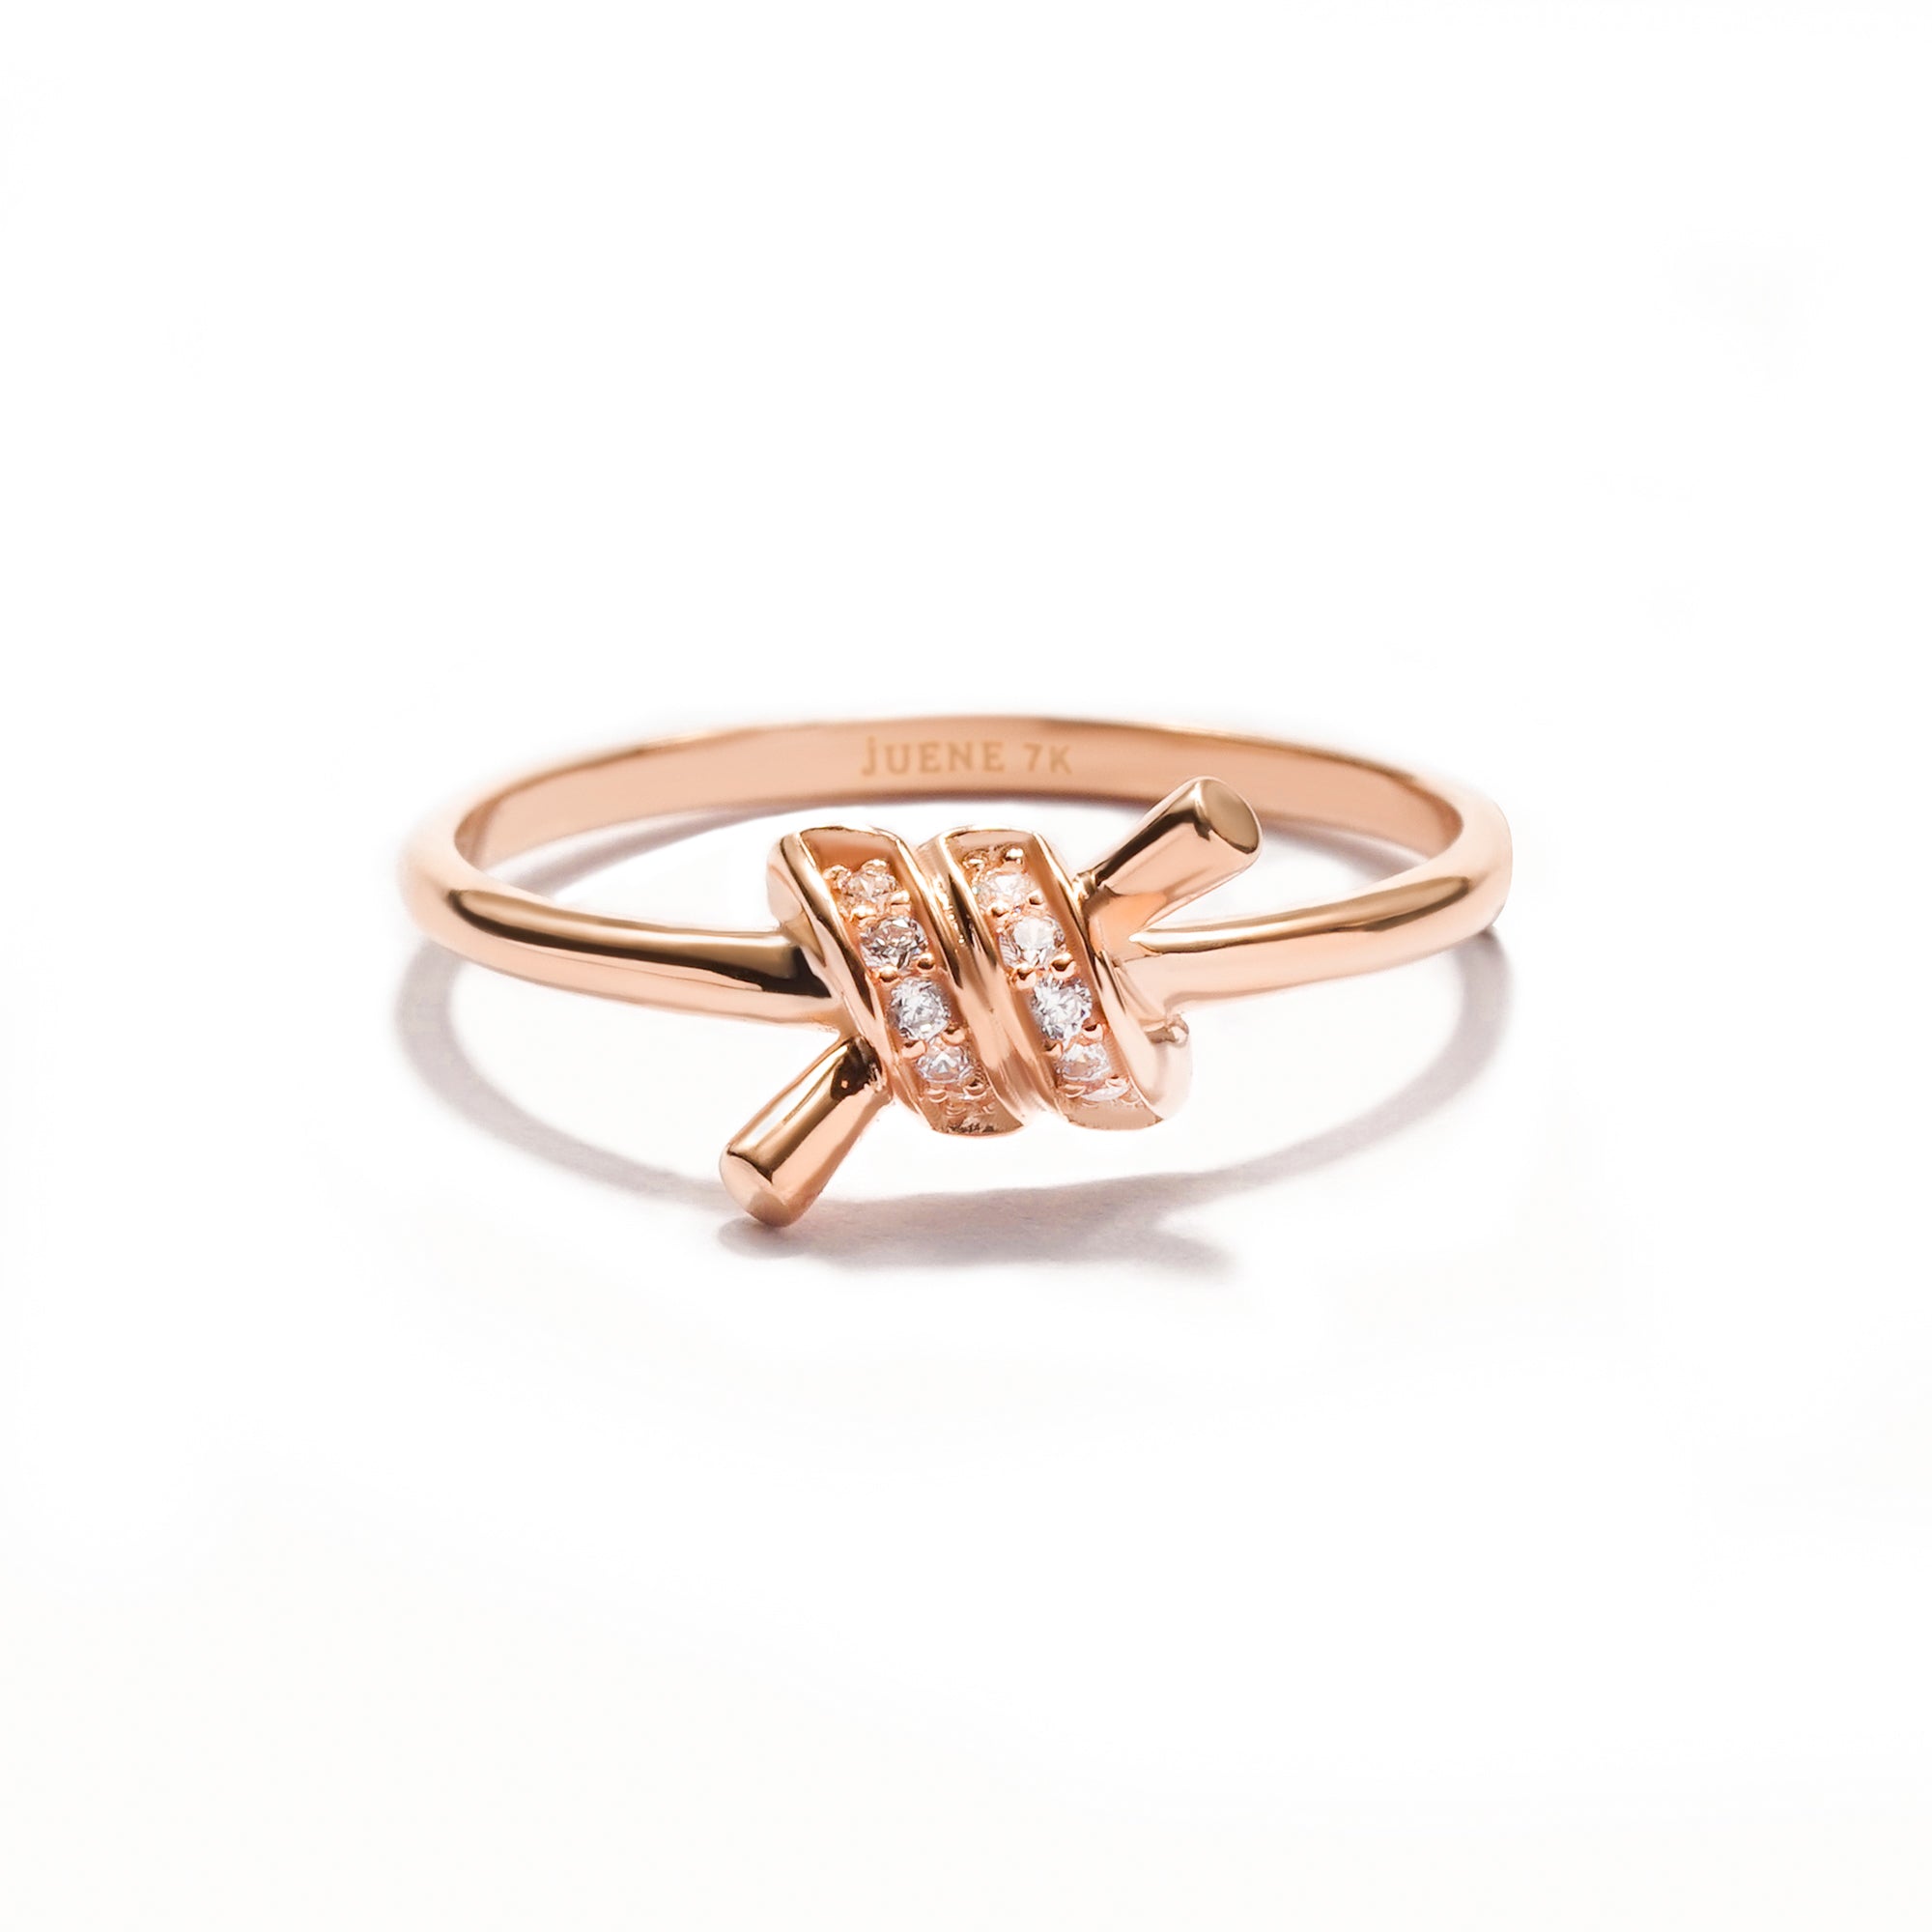 Lavita Gold Ring - Twine Collection - Juene Jewelry